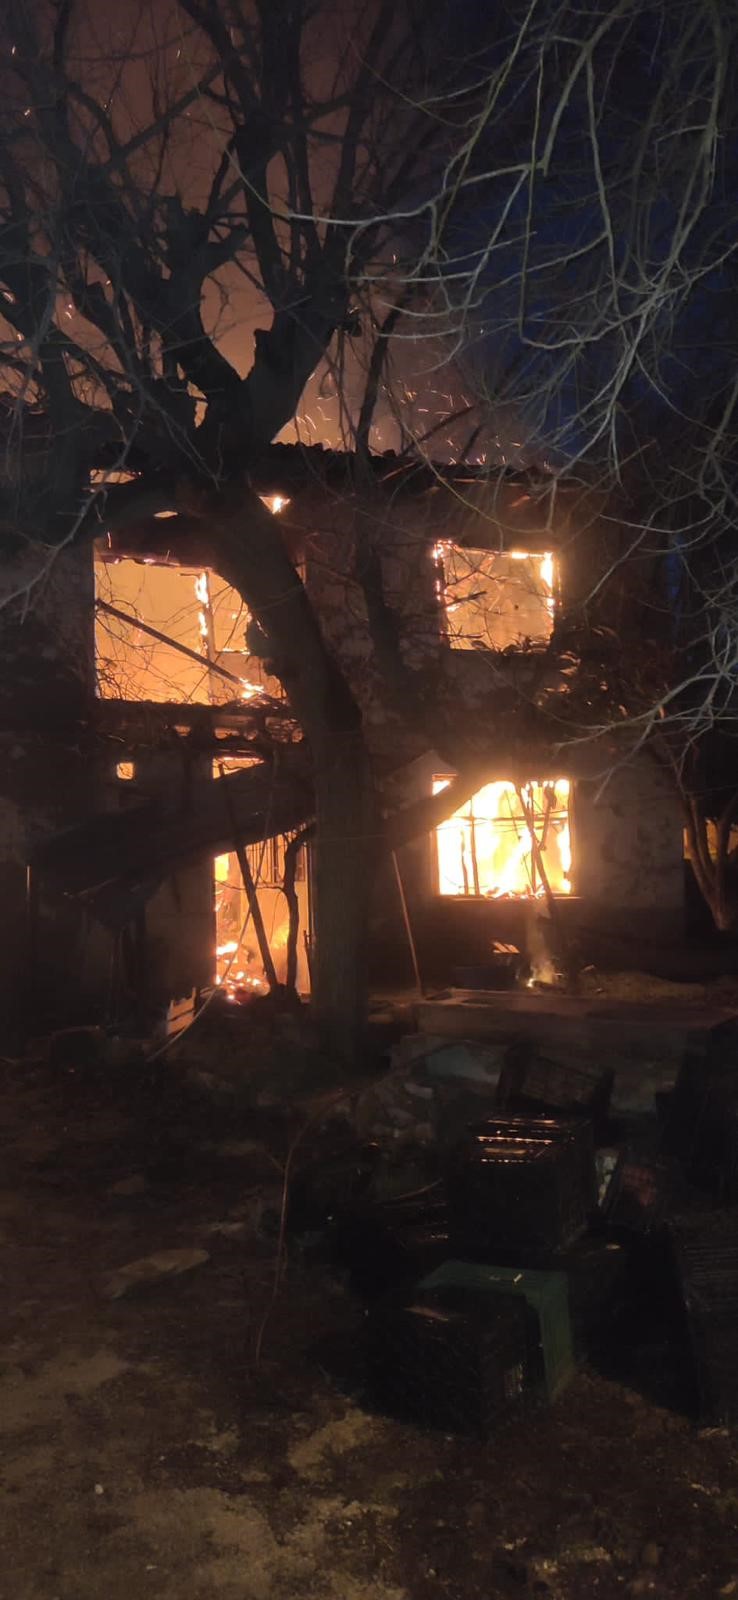 Bilecik'te iki katlı ahşap ev alev alev yandı